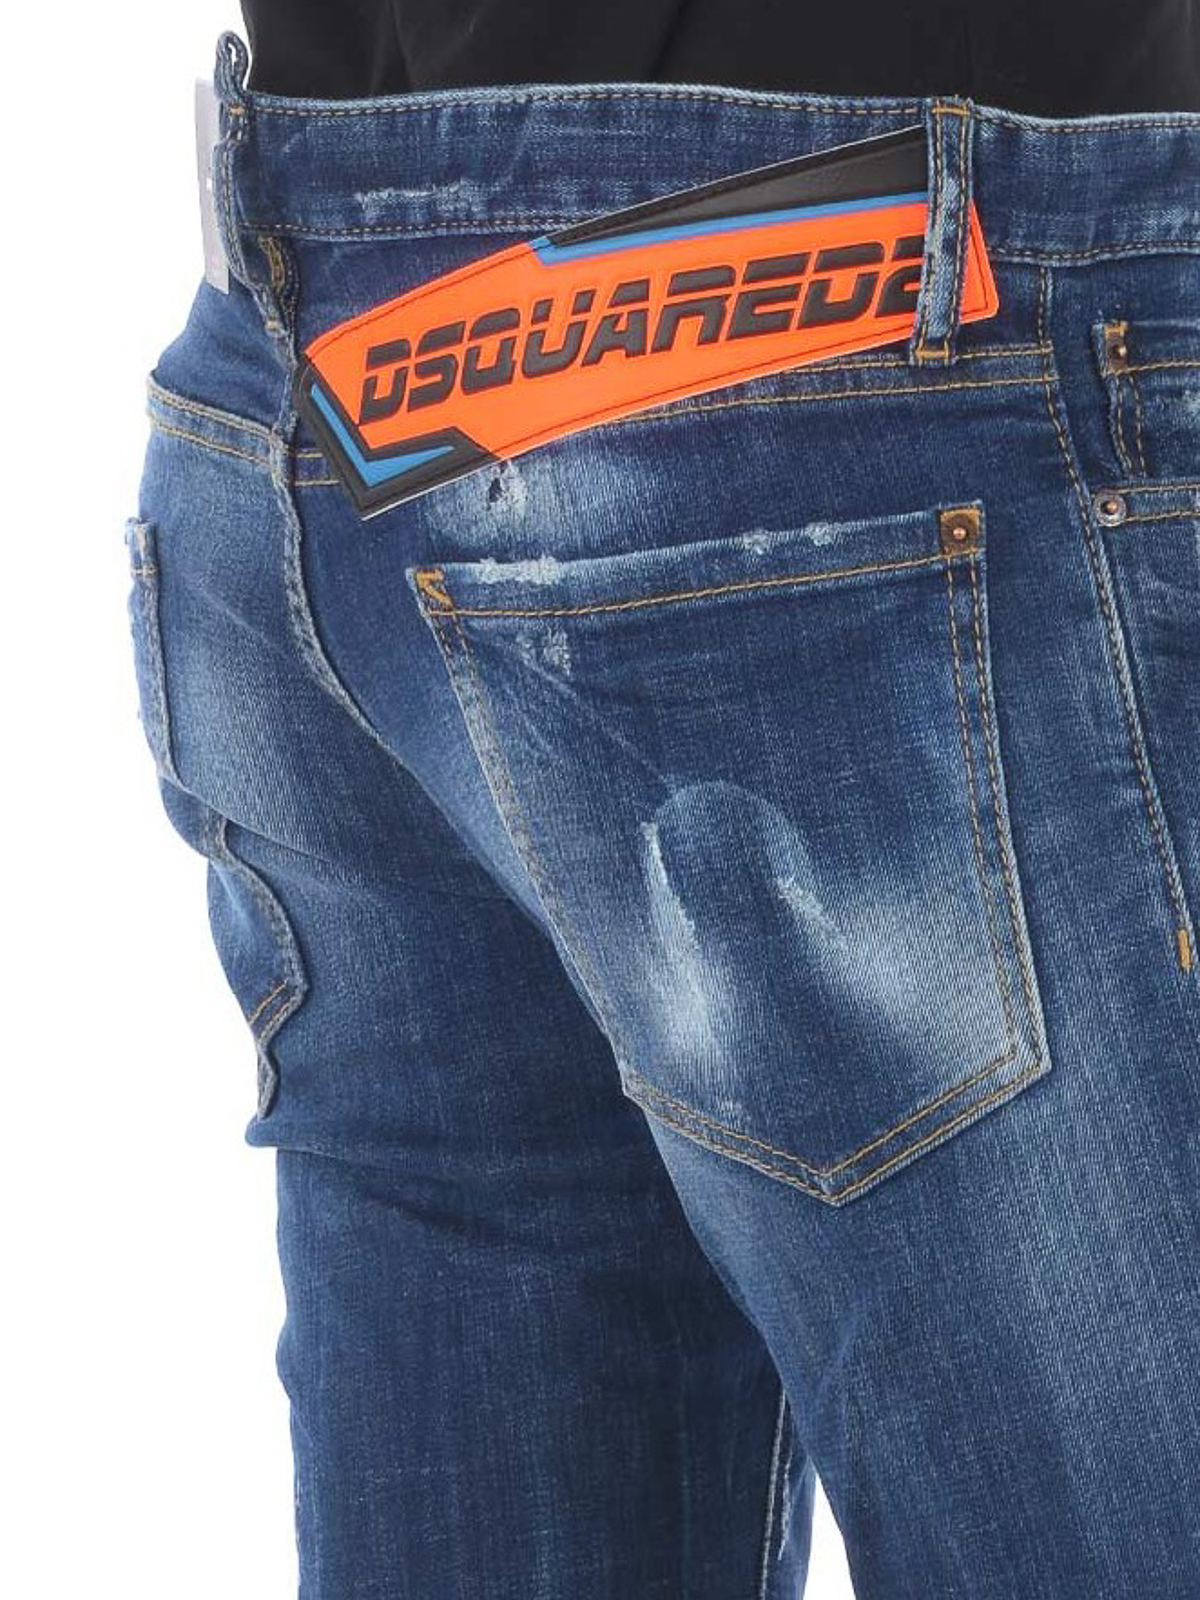 dsquared2 jeans logo